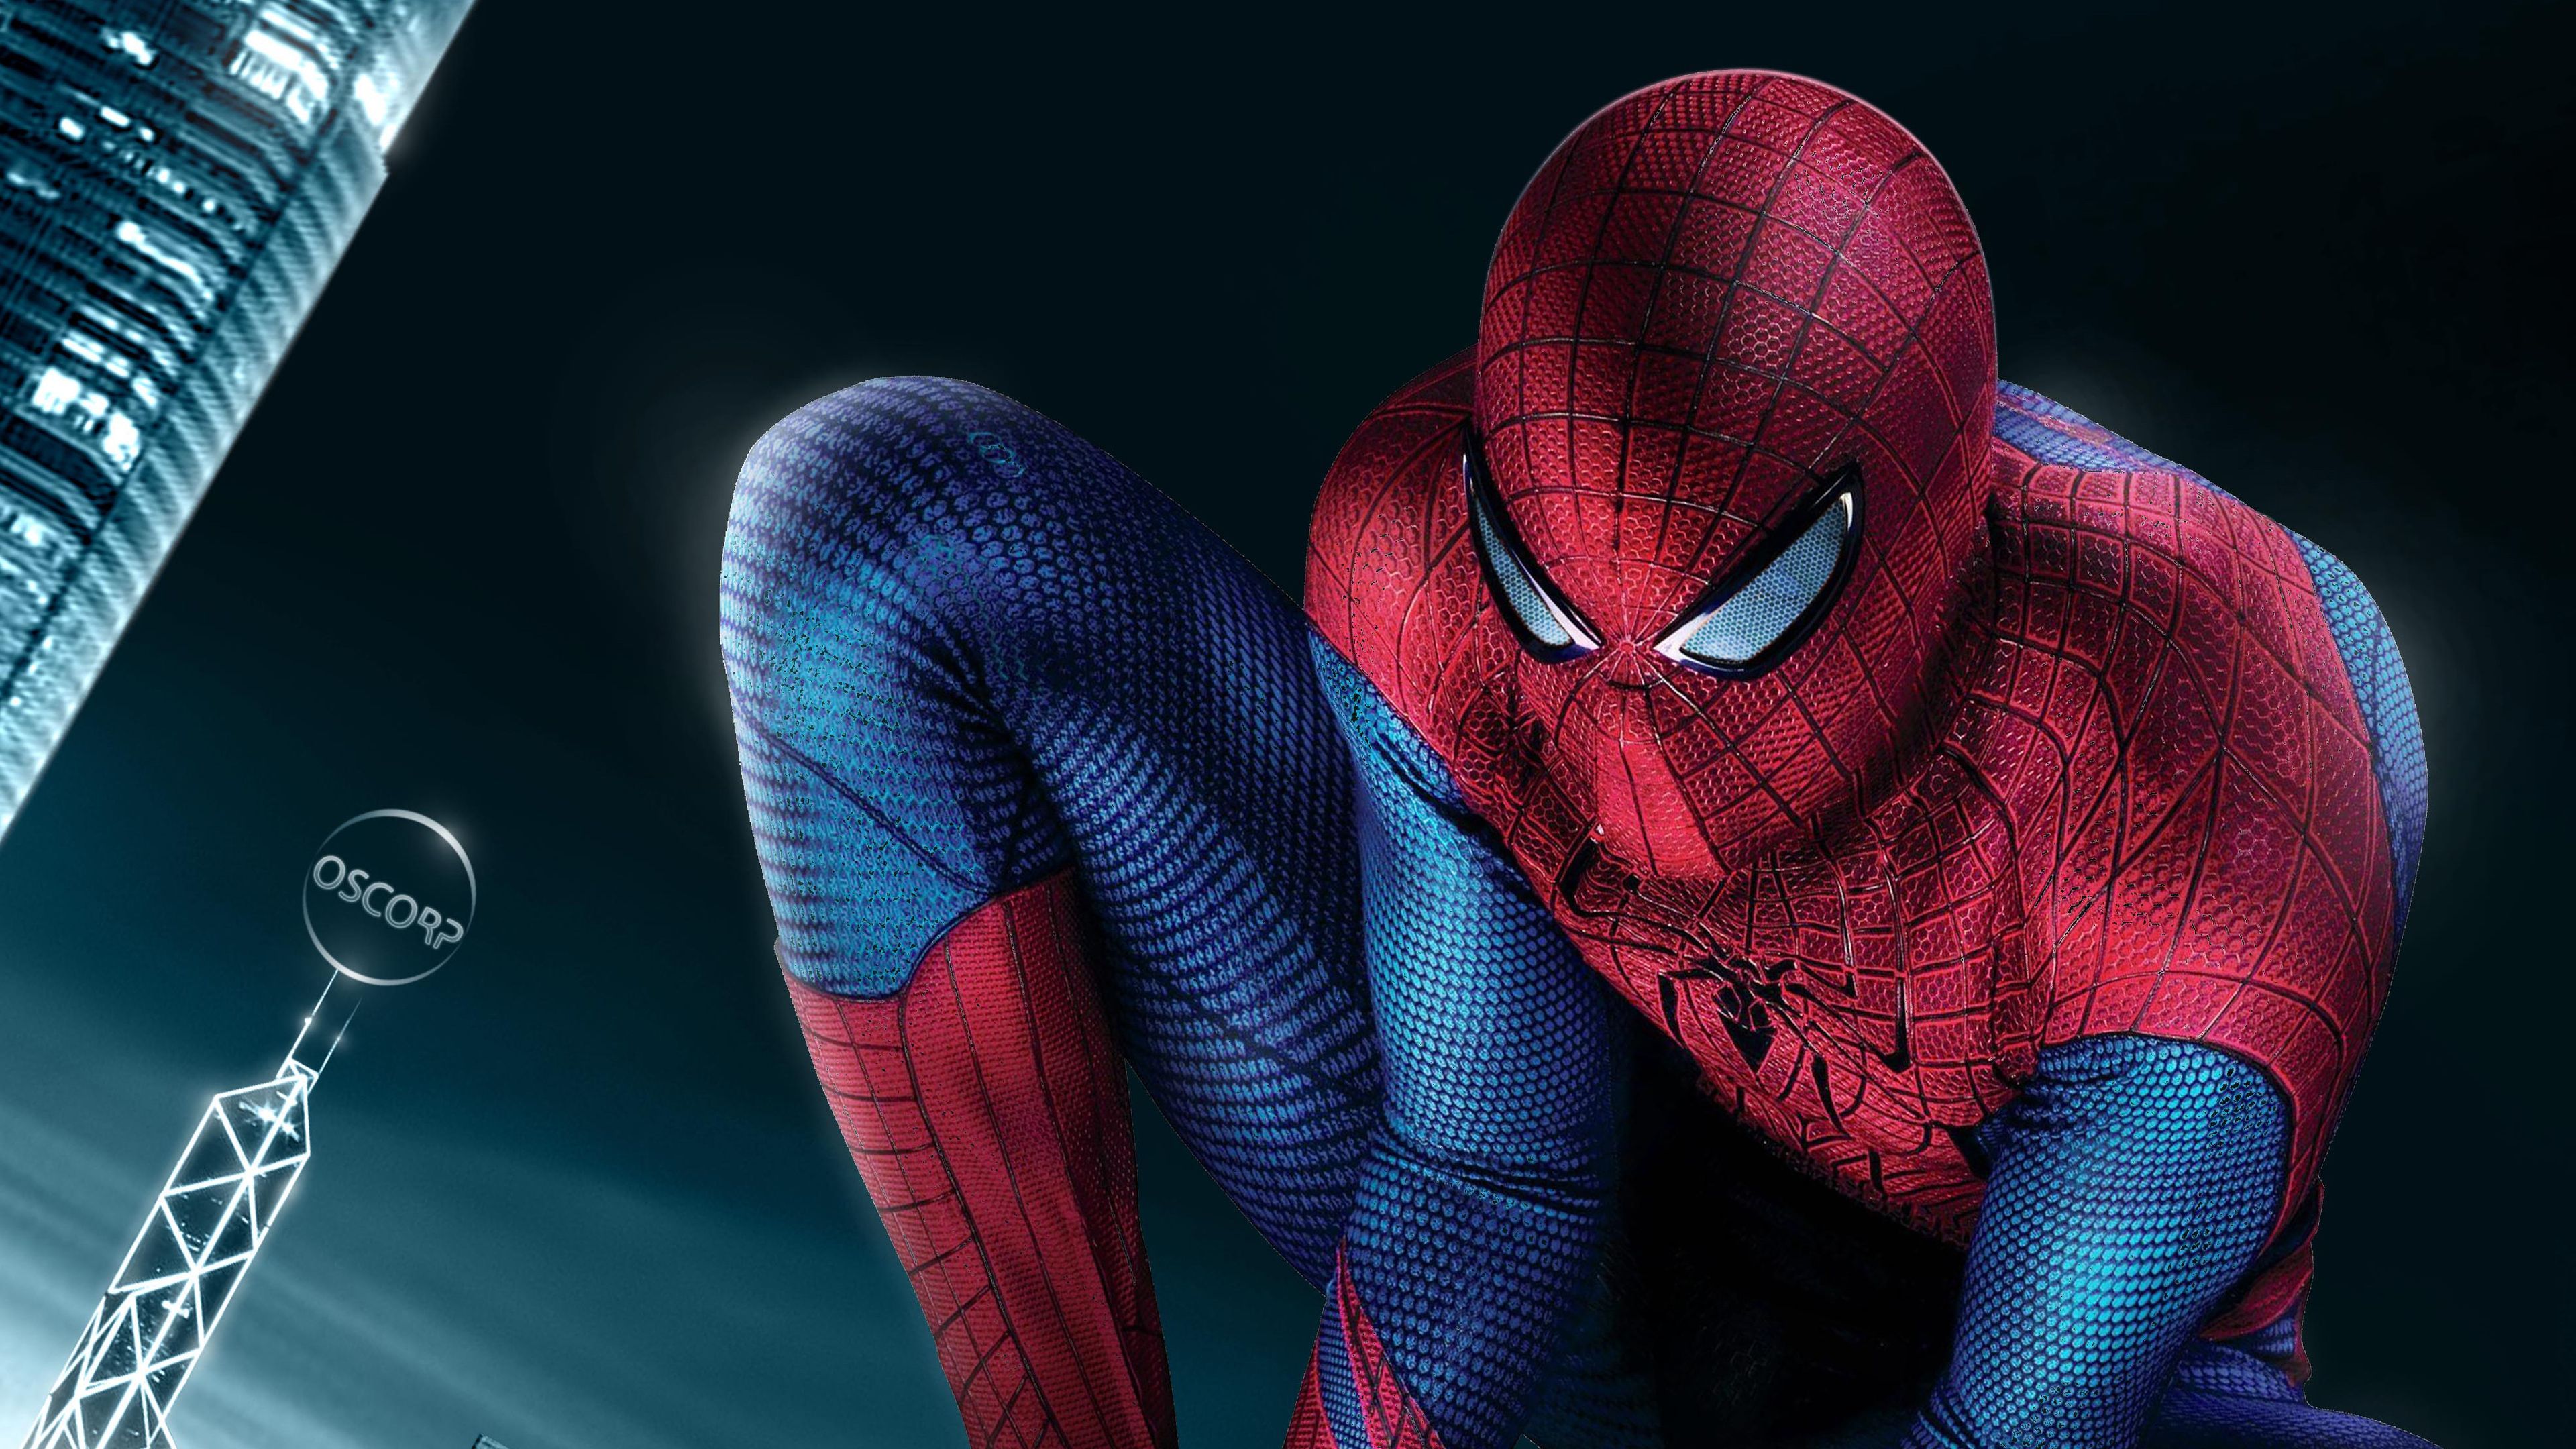 Amazing Spider Man 4k superheroes wallpaper, spiderman wallpaper, hd- wallpaper, digital art wallpaper, wal. Spiderman, Android wallpaper, Superhero